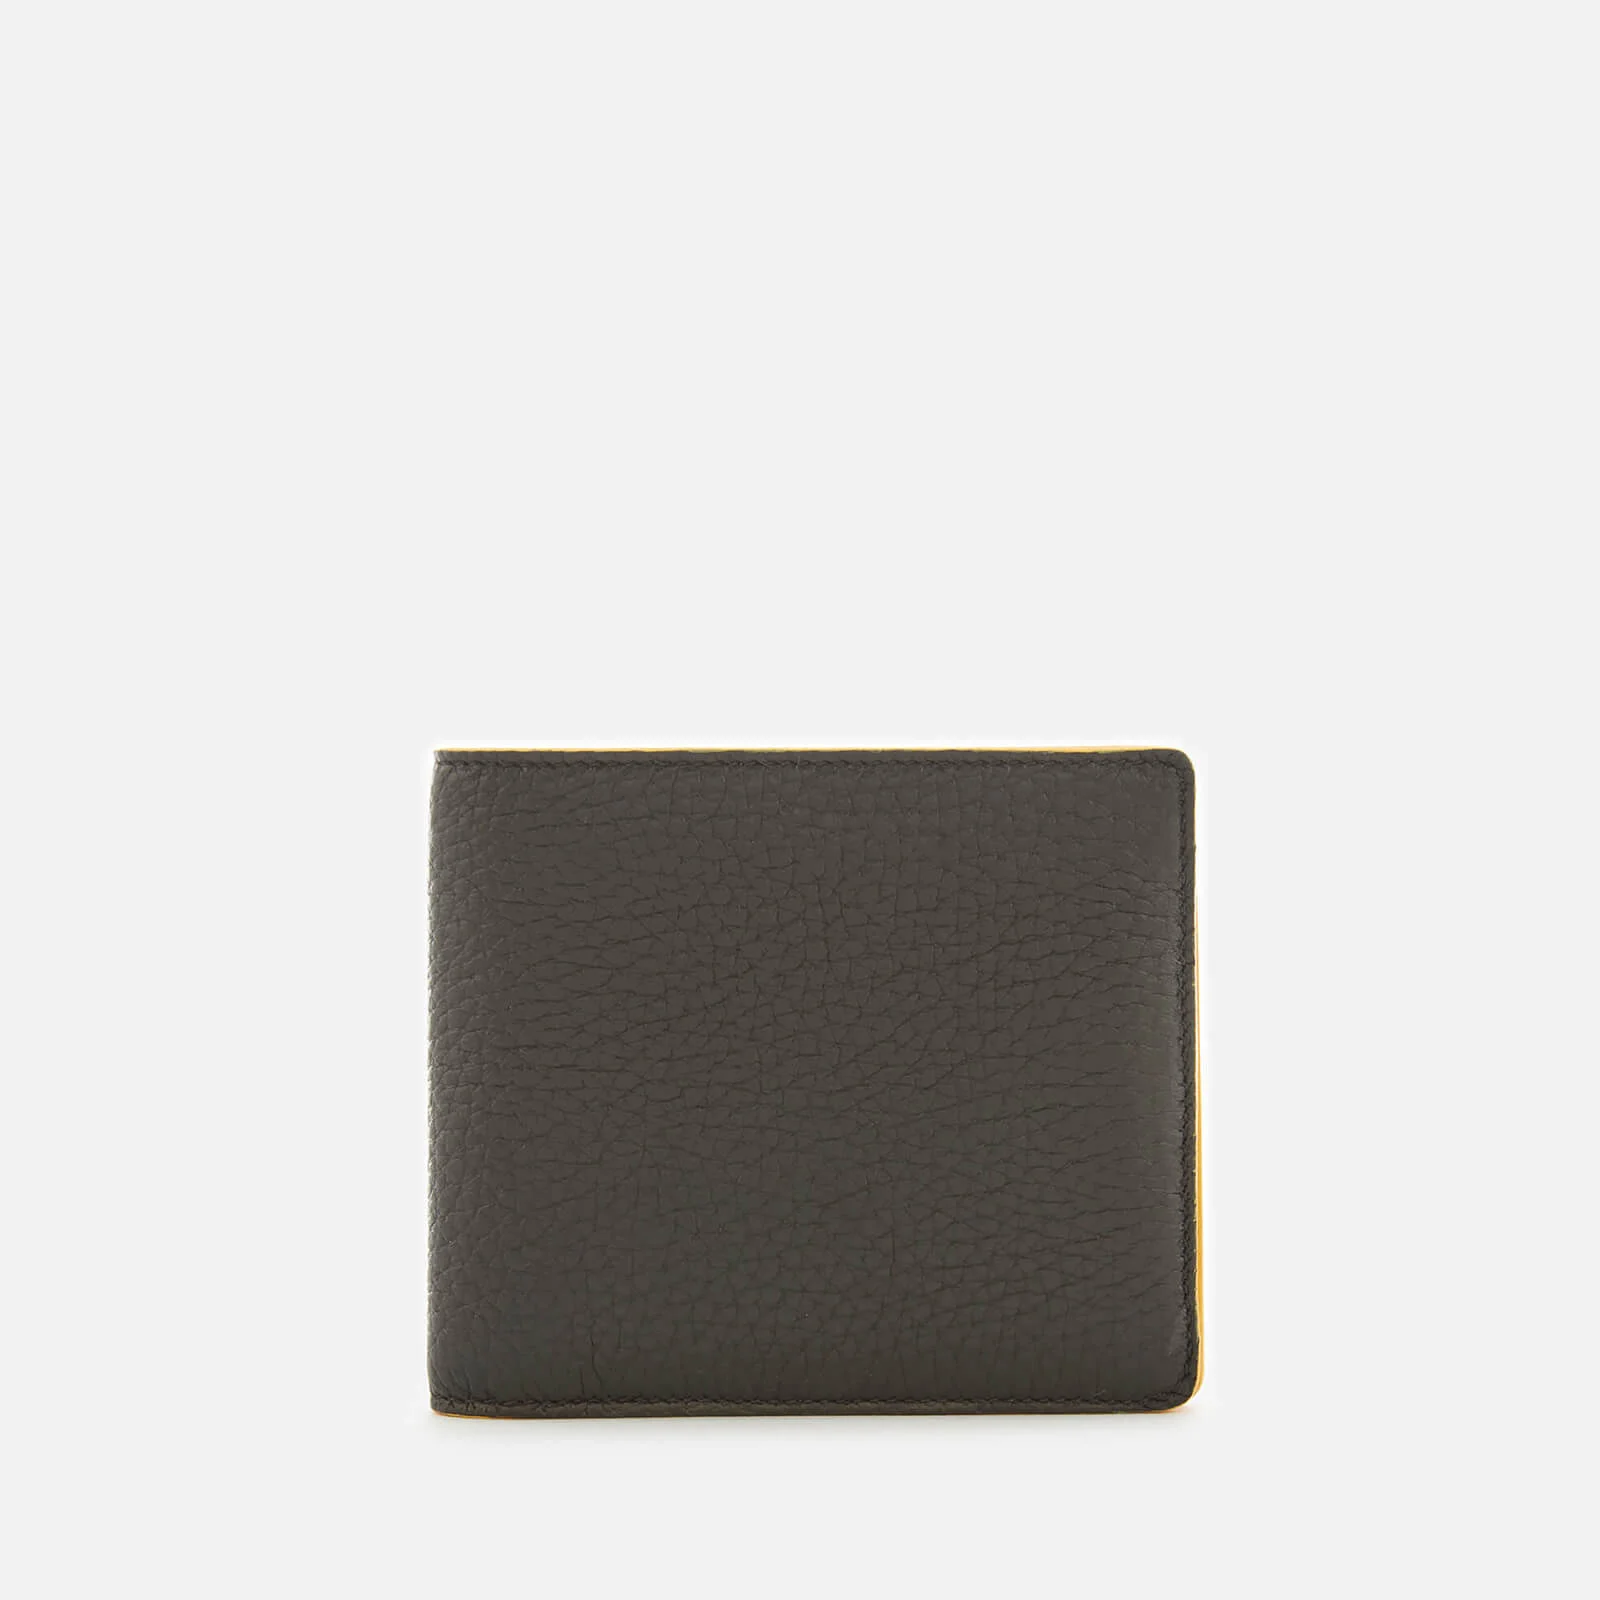 Maison Margiela Men's Leather Bi Fold Wallet - Black Image 1